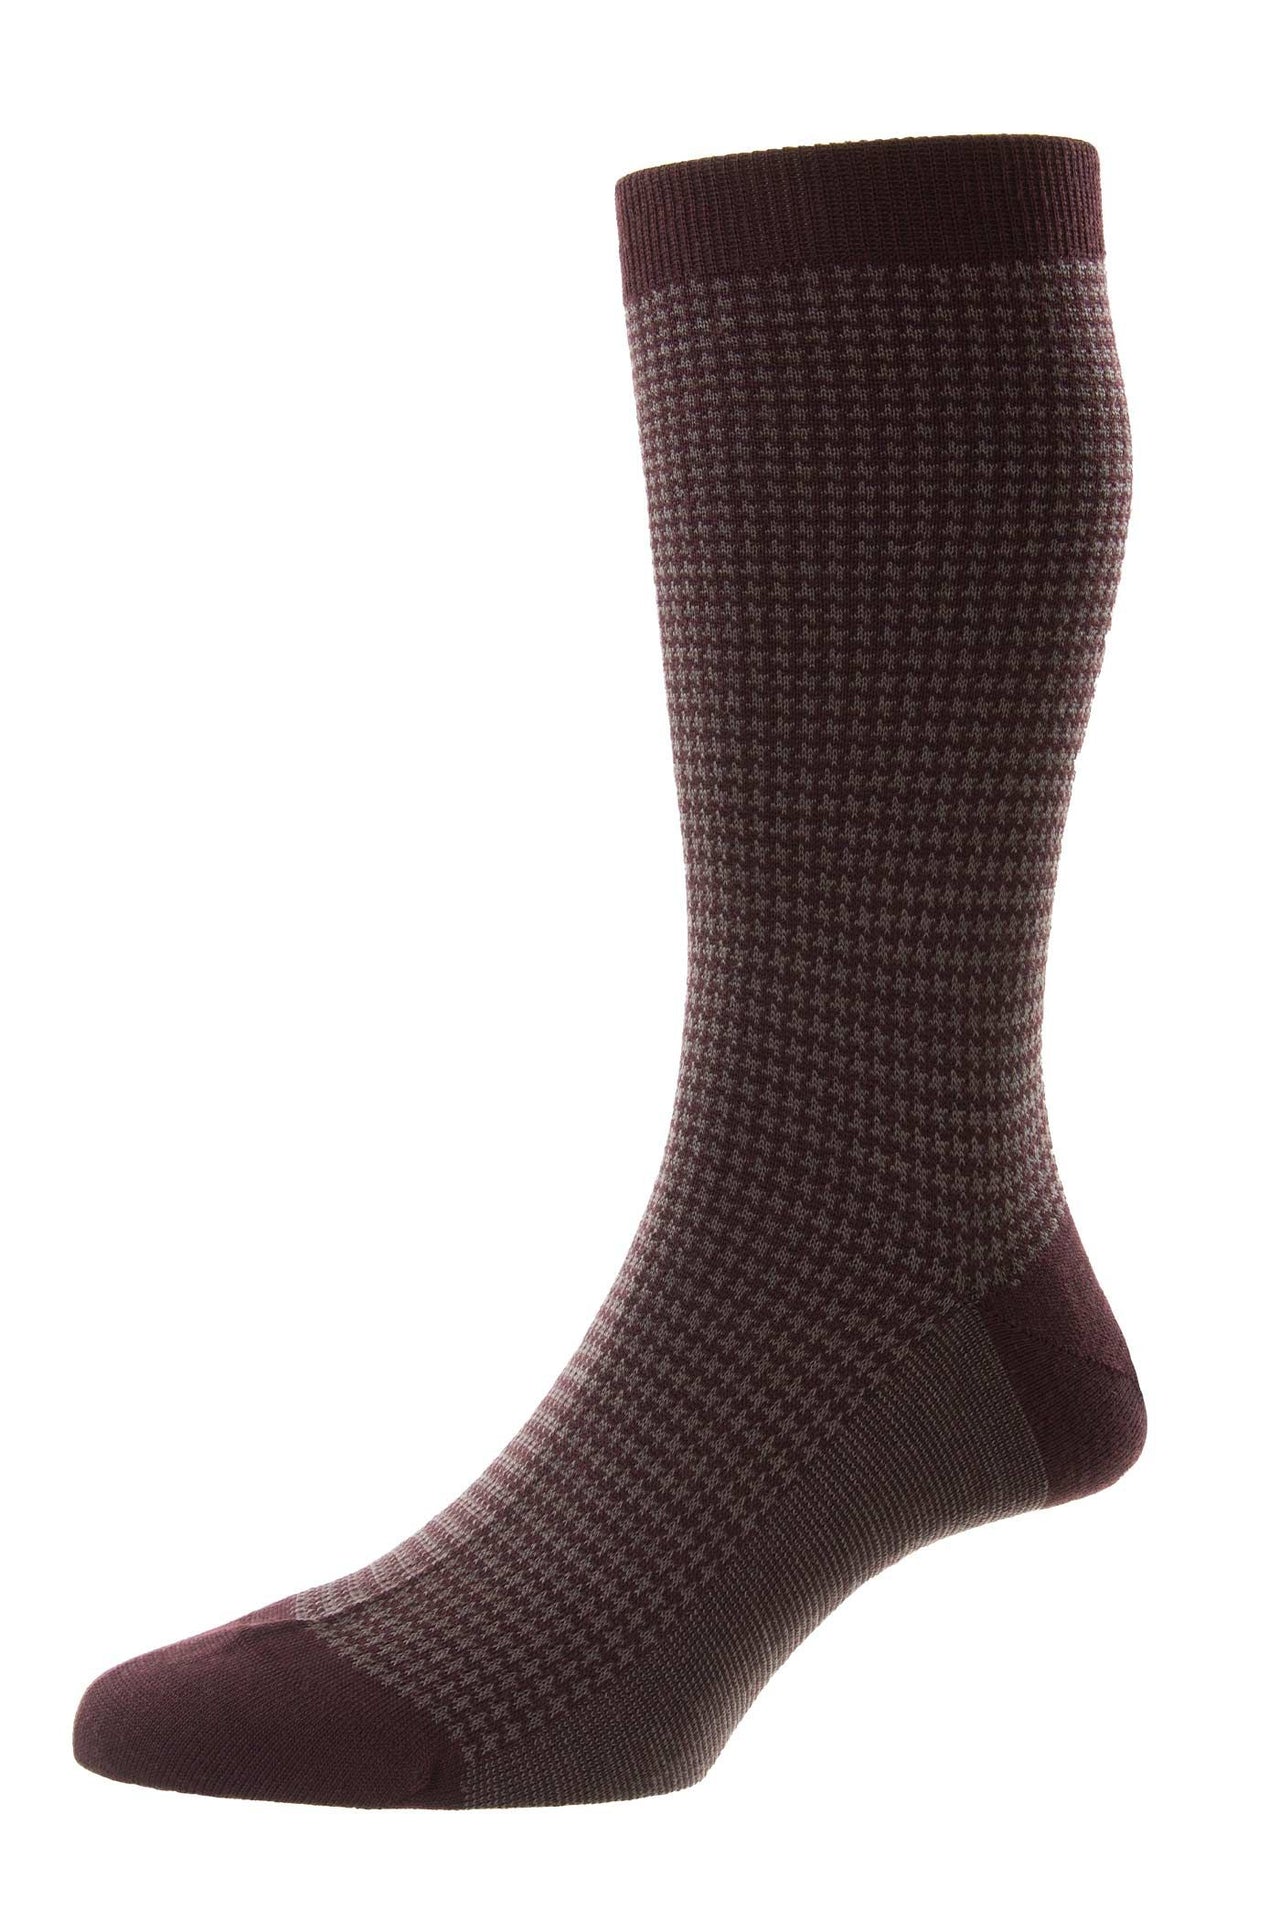 PANTHERELLA Highbury Houndstooth Merino Wool Men's Socks MAROON